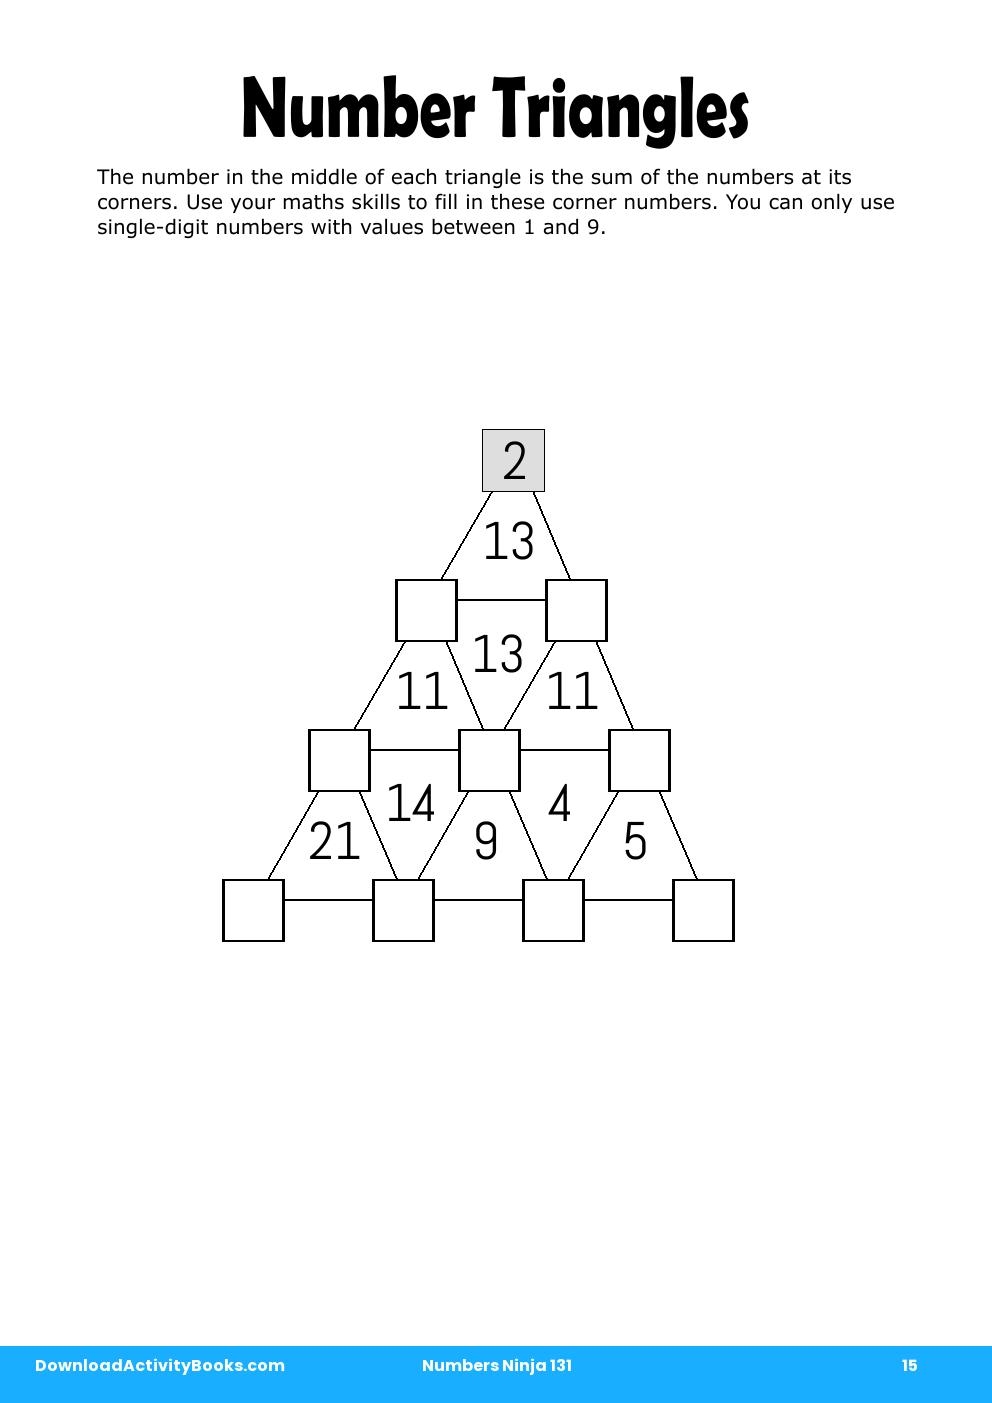 Number Triangles in Numbers Ninja 131